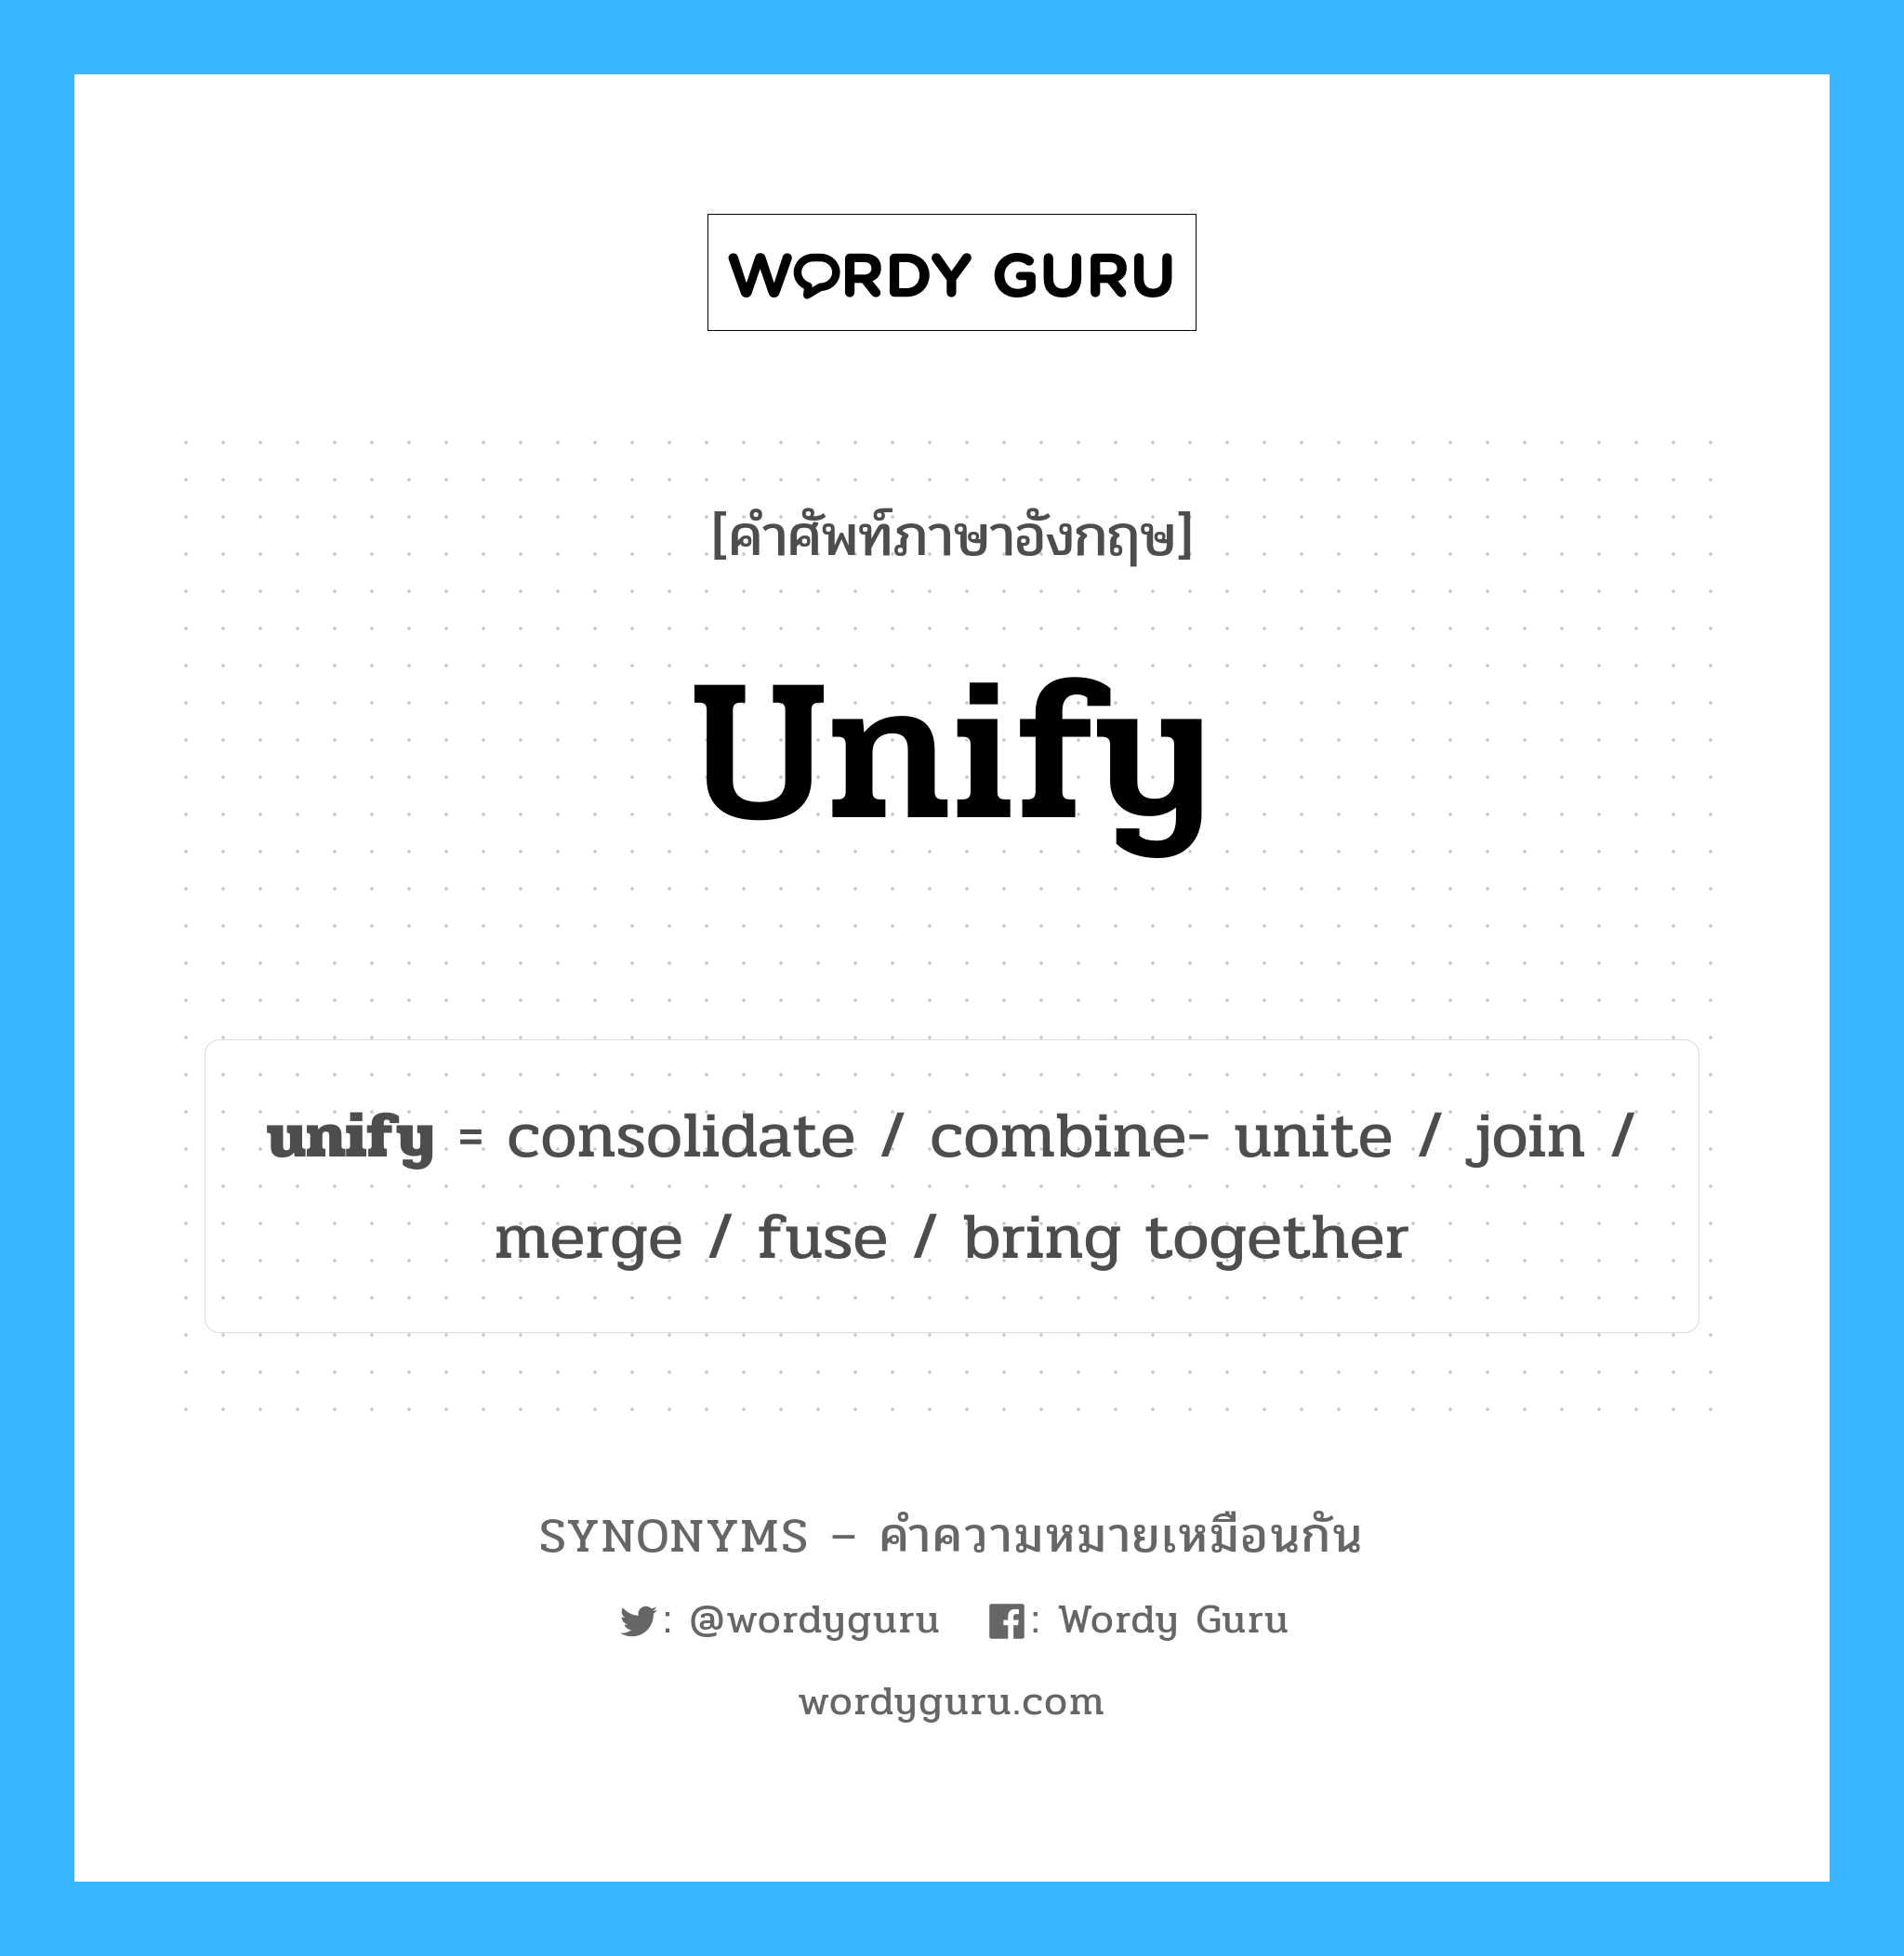 join เป็นหนึ่งใน unify และมีคำอื่น ๆ อีกดังนี้, คำศัพท์ภาษาอังกฤษ join ความหมายคล้ายกันกับ unify แปลว่า เข้าร่วม หมวด unify